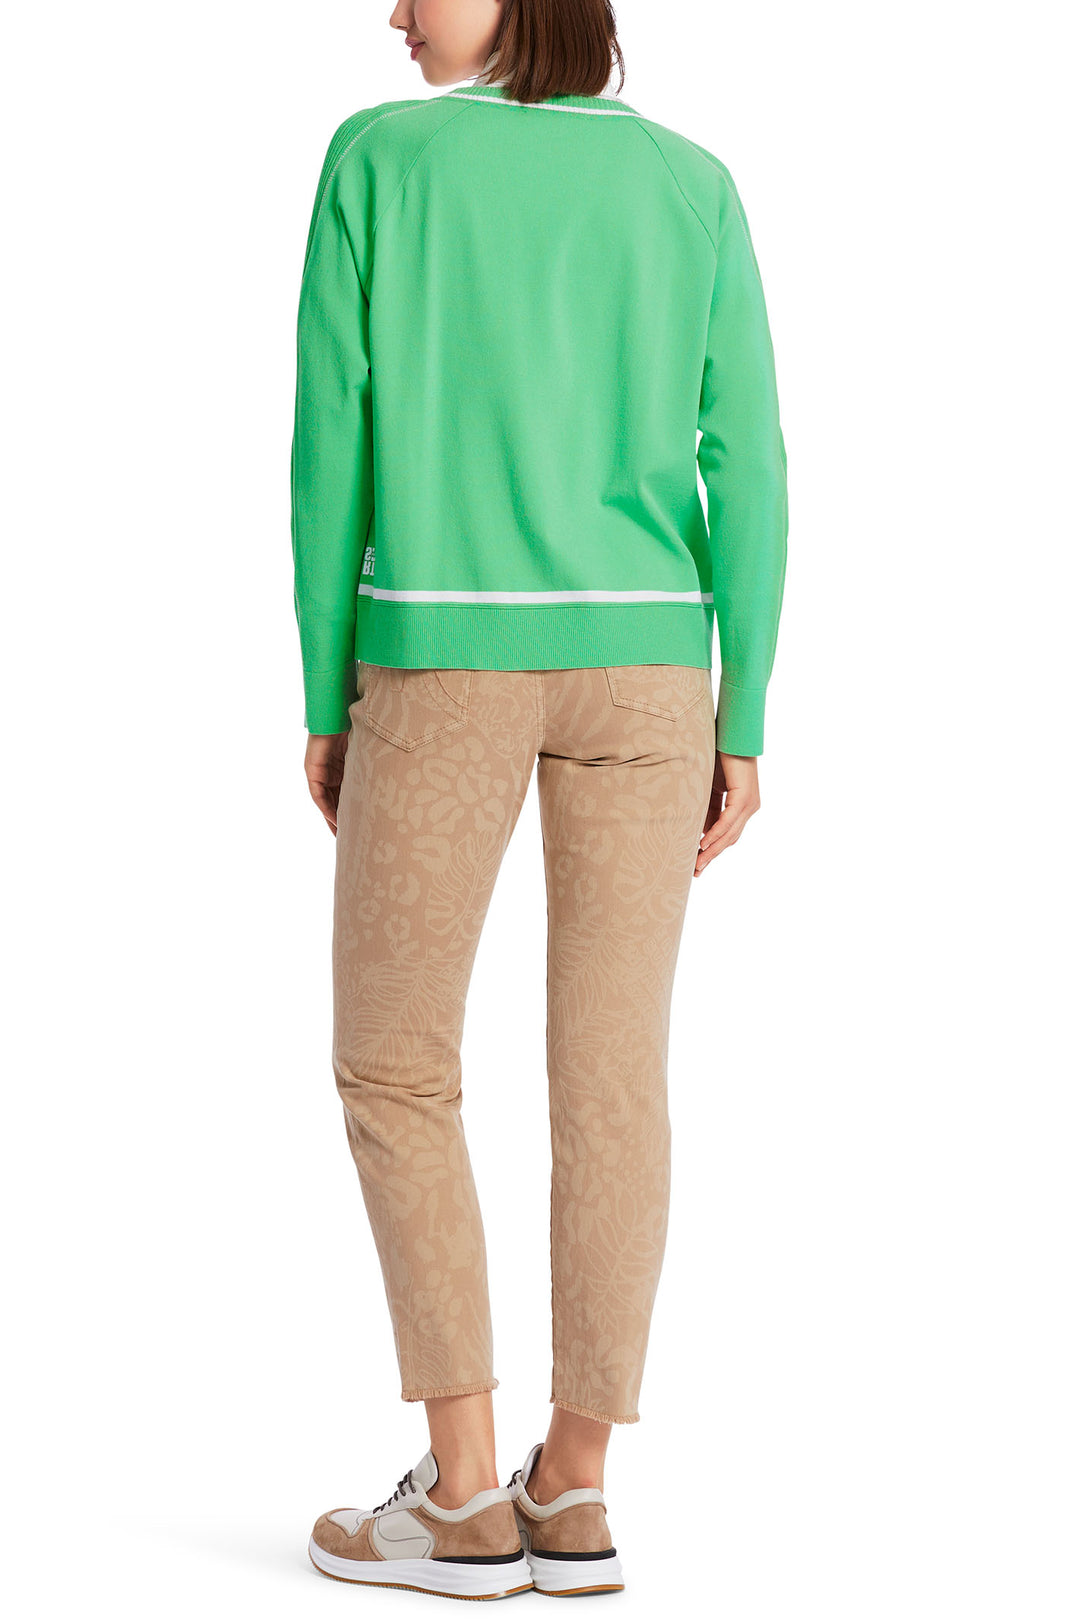 Marc Cain Sports WS 41.05 M09 543 New Neon Green Jumper - Olivia Grace Fashion